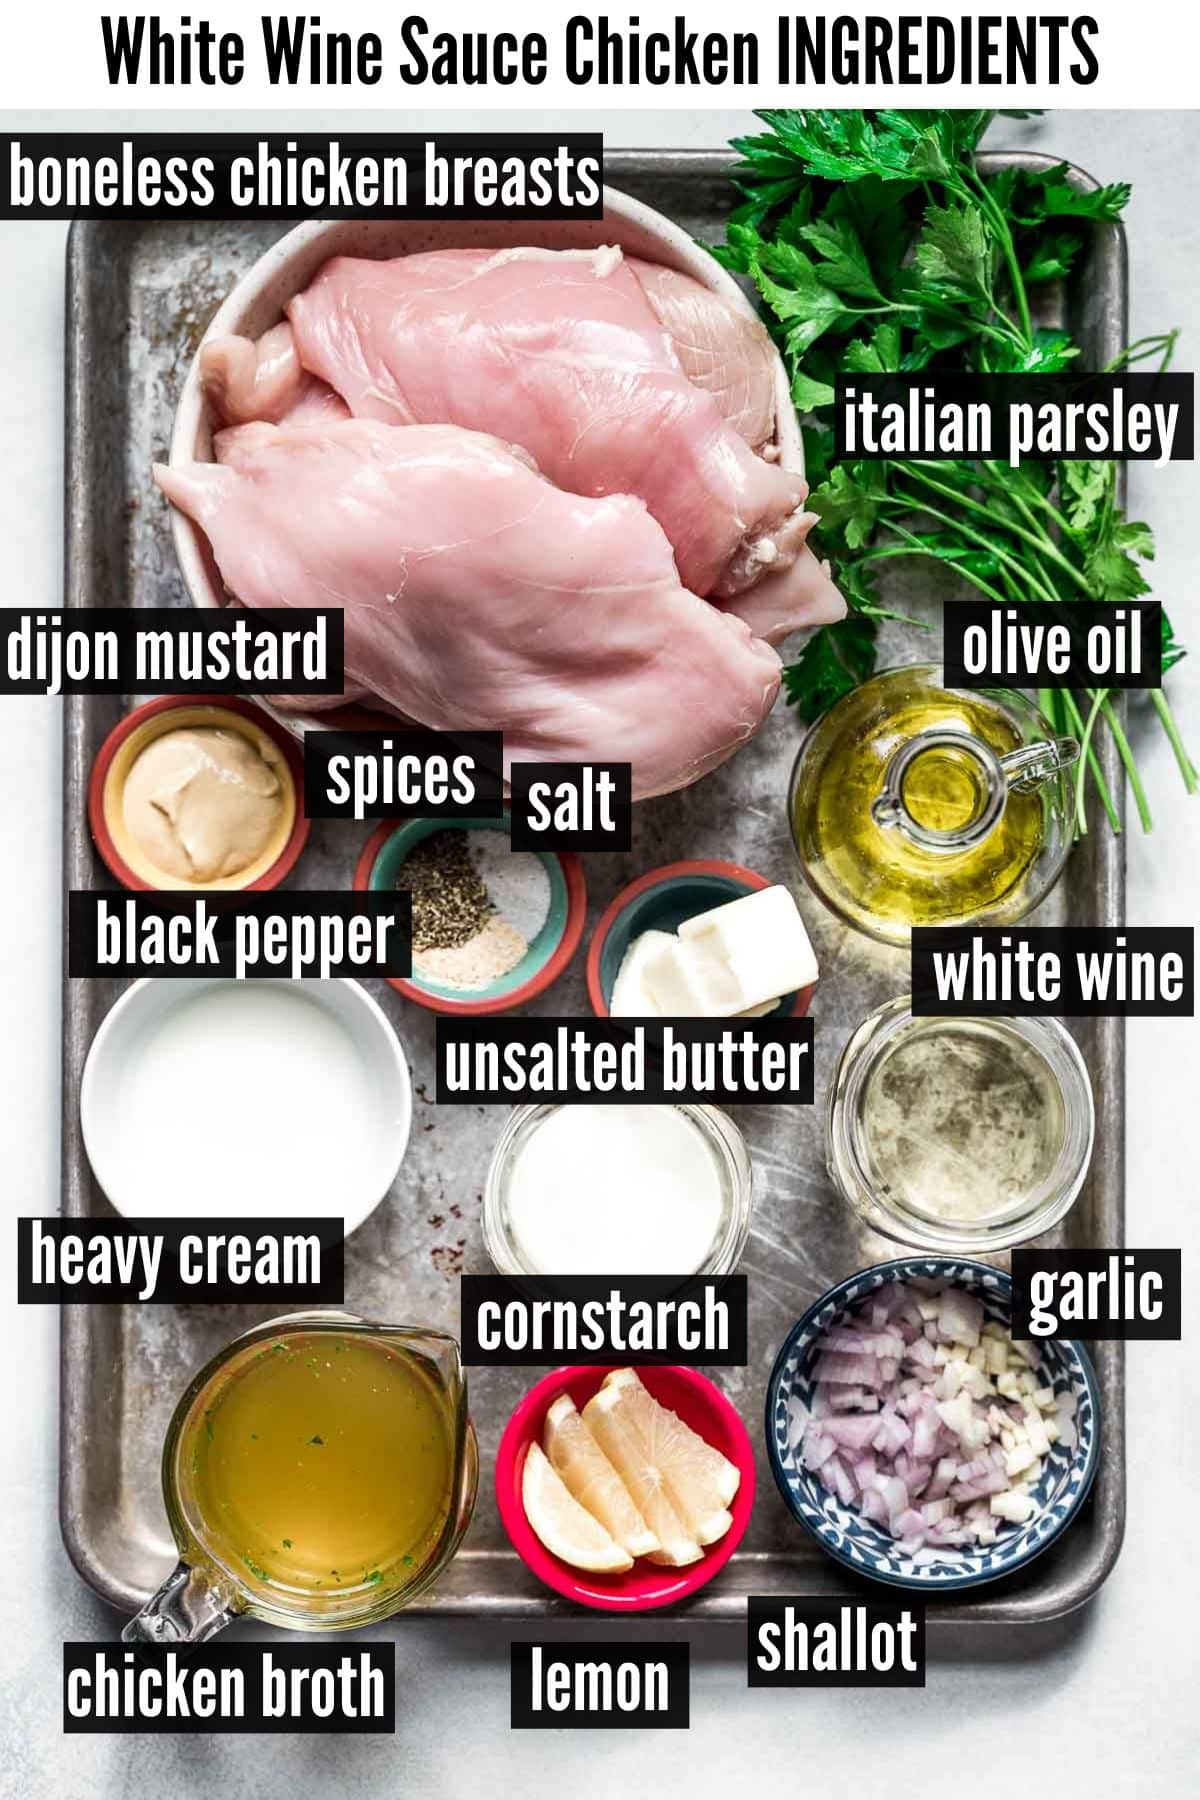 chicken in white wine sauce labelled ingredients.